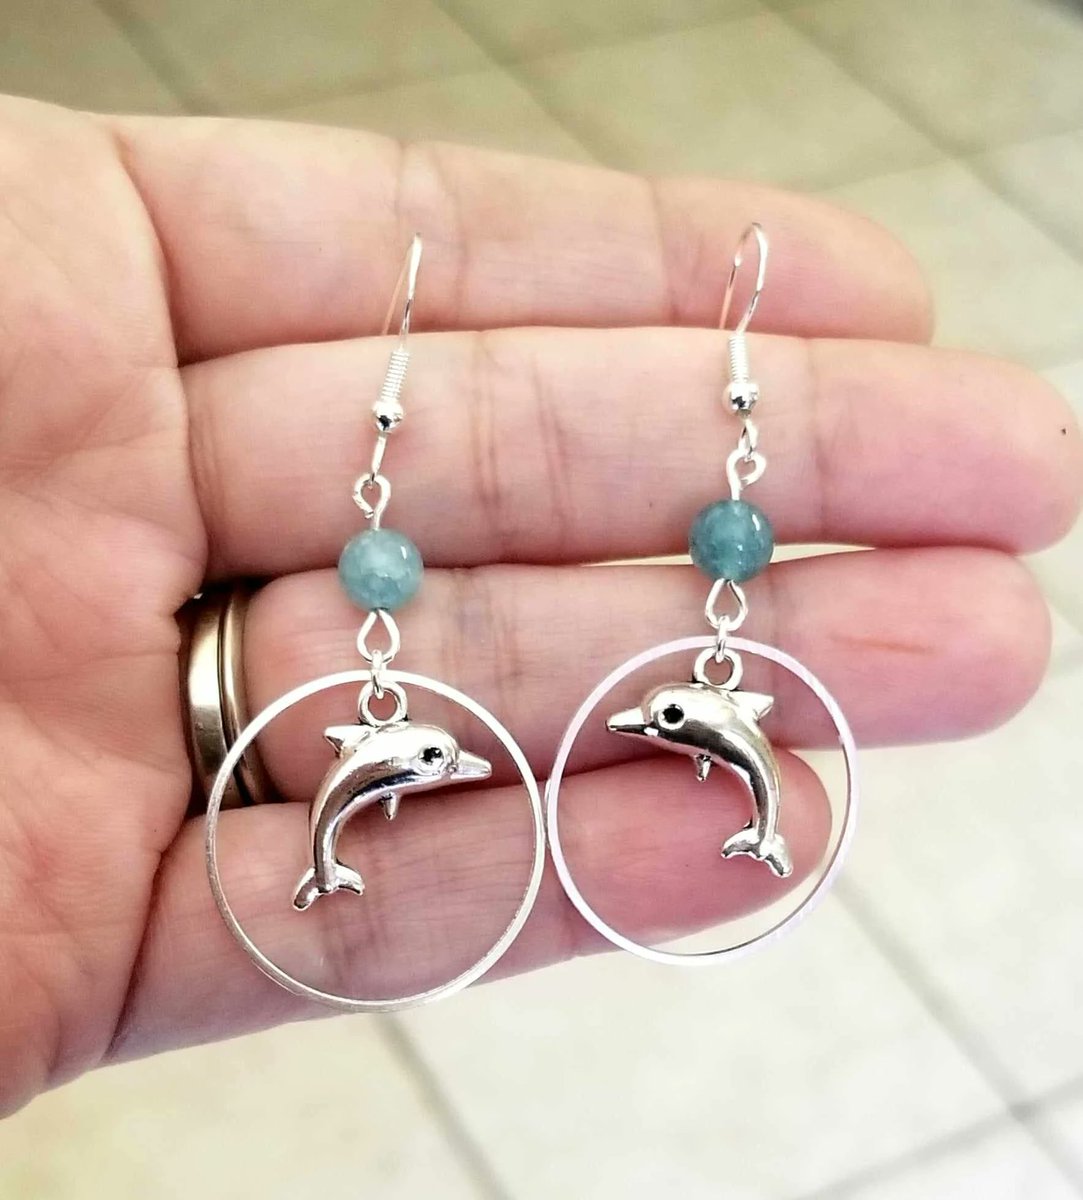 Silver Dolphin Earrings, Aquamarine Earrings 
#jewelry #handmadejewelry #giftsforher #mothersdaygifts #graduationgift #earrings #aquamarine #aquamarinejewelry #aquamarineearrings #dolphin #dolphins #dolphinearrings #beach #sealife #ocean 

etsy.me/488jkkD via @Etsy